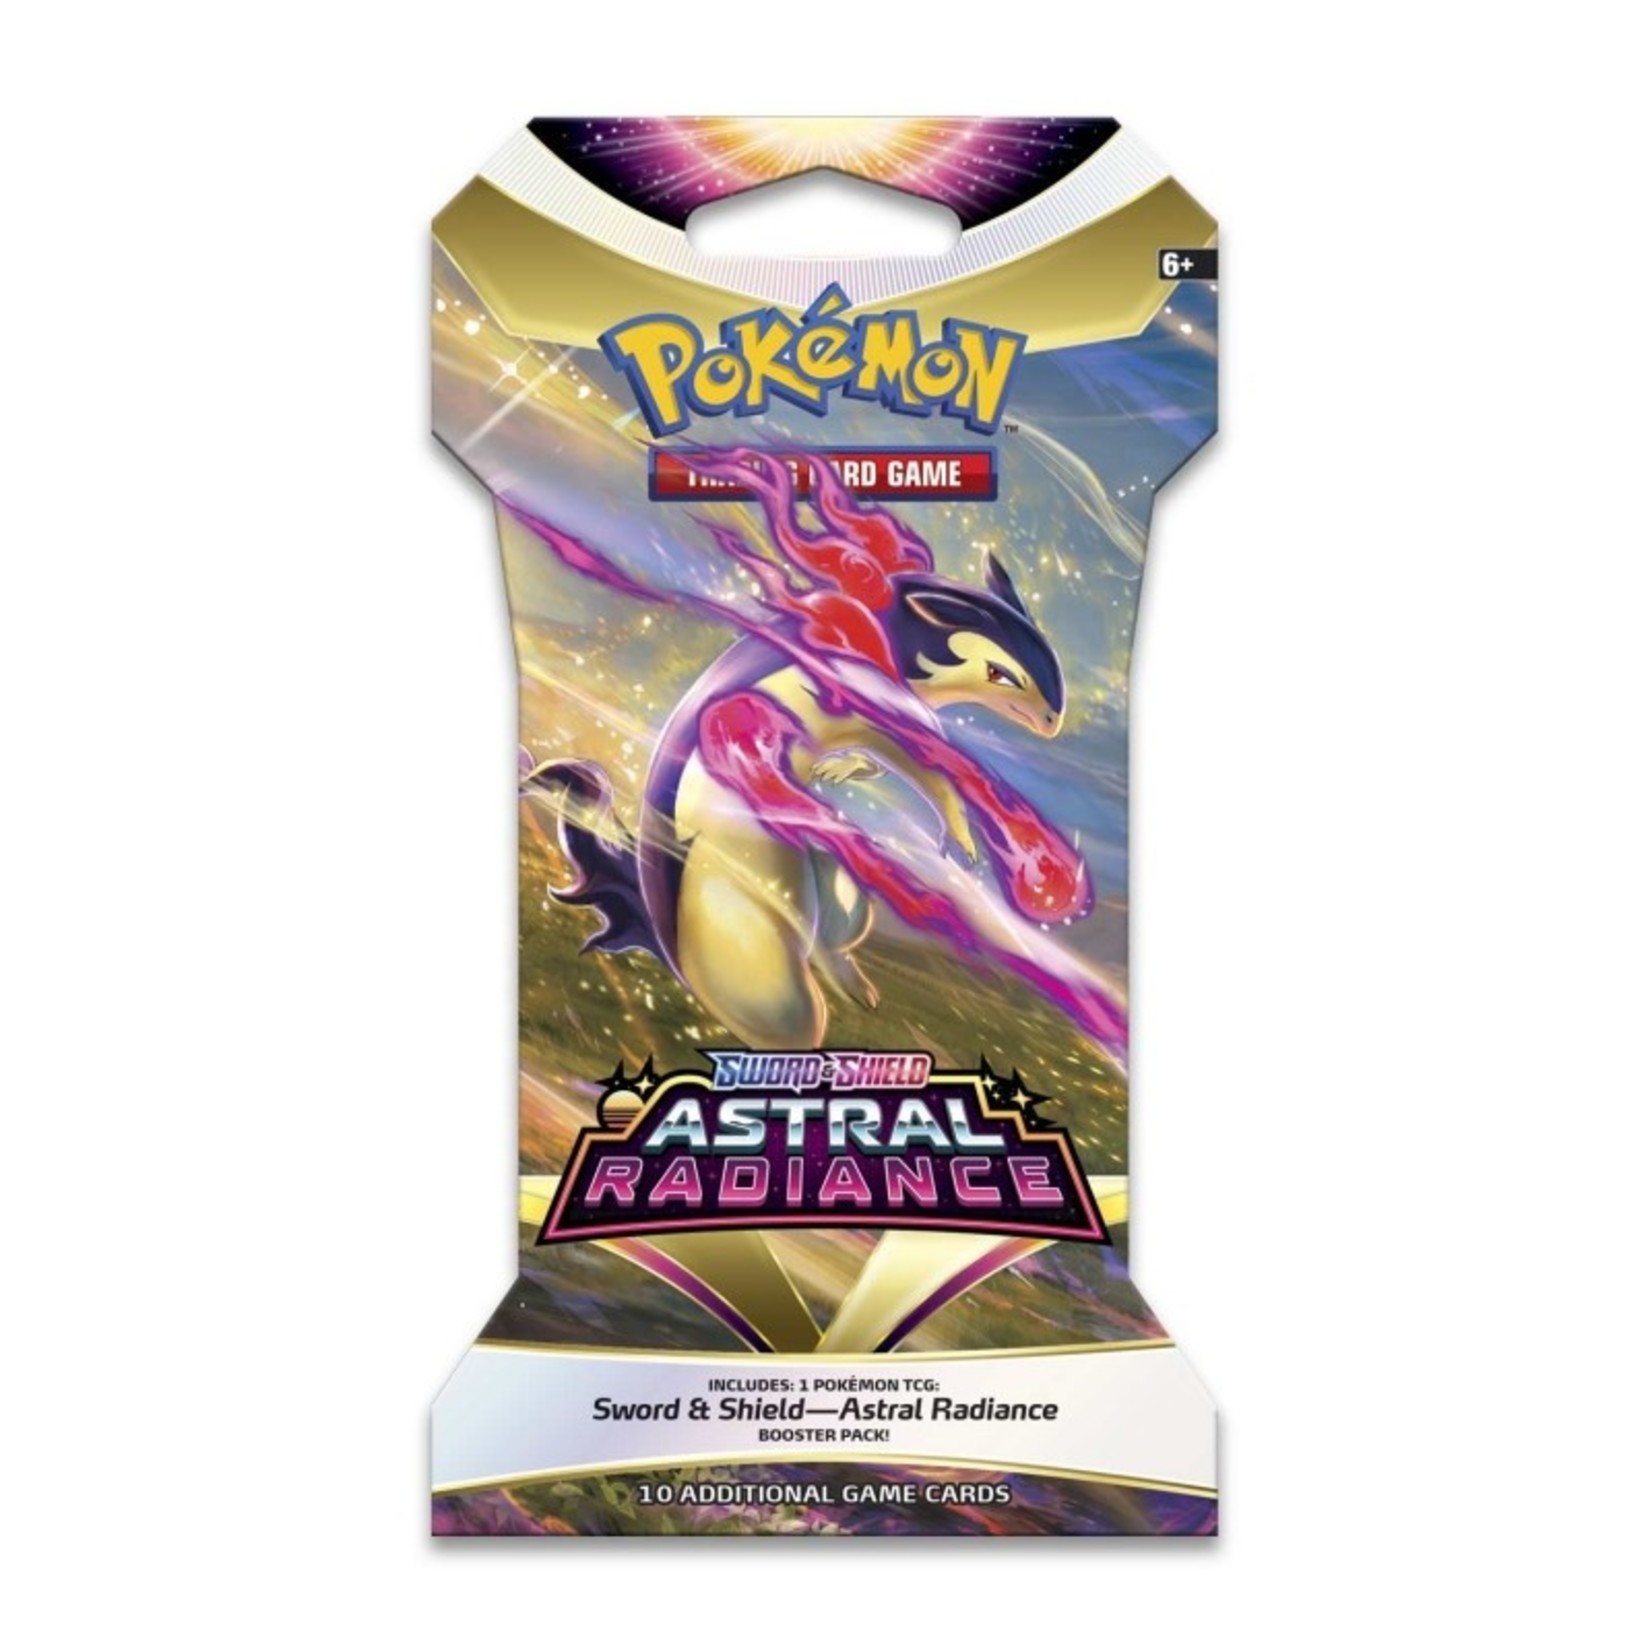 Pokémon Pokémon TCG: Astral Radiance Sleeved Booster Pack (10 Cards)